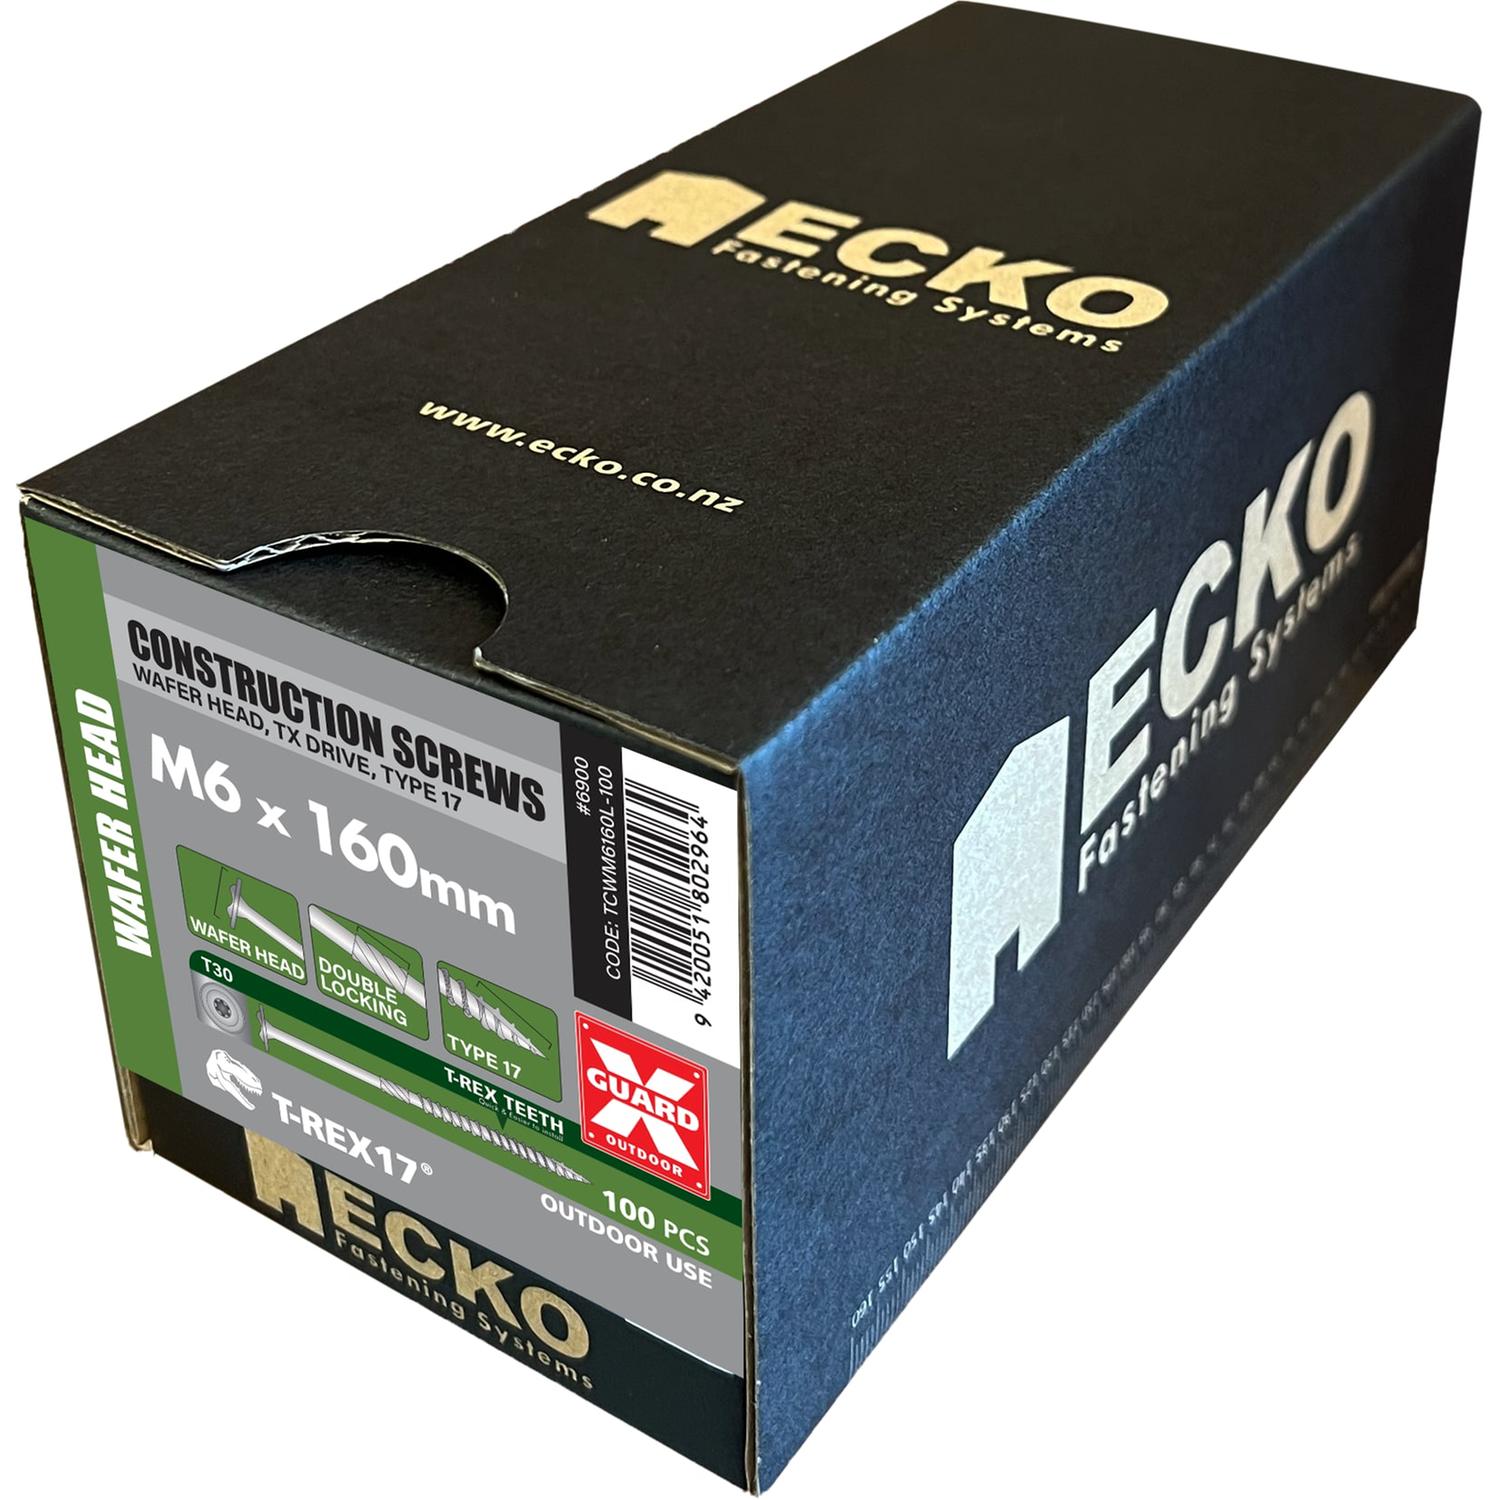 Ecko T-Rex17 Wafer Head Construction Screws M6 X 160Mm (500 Pack)